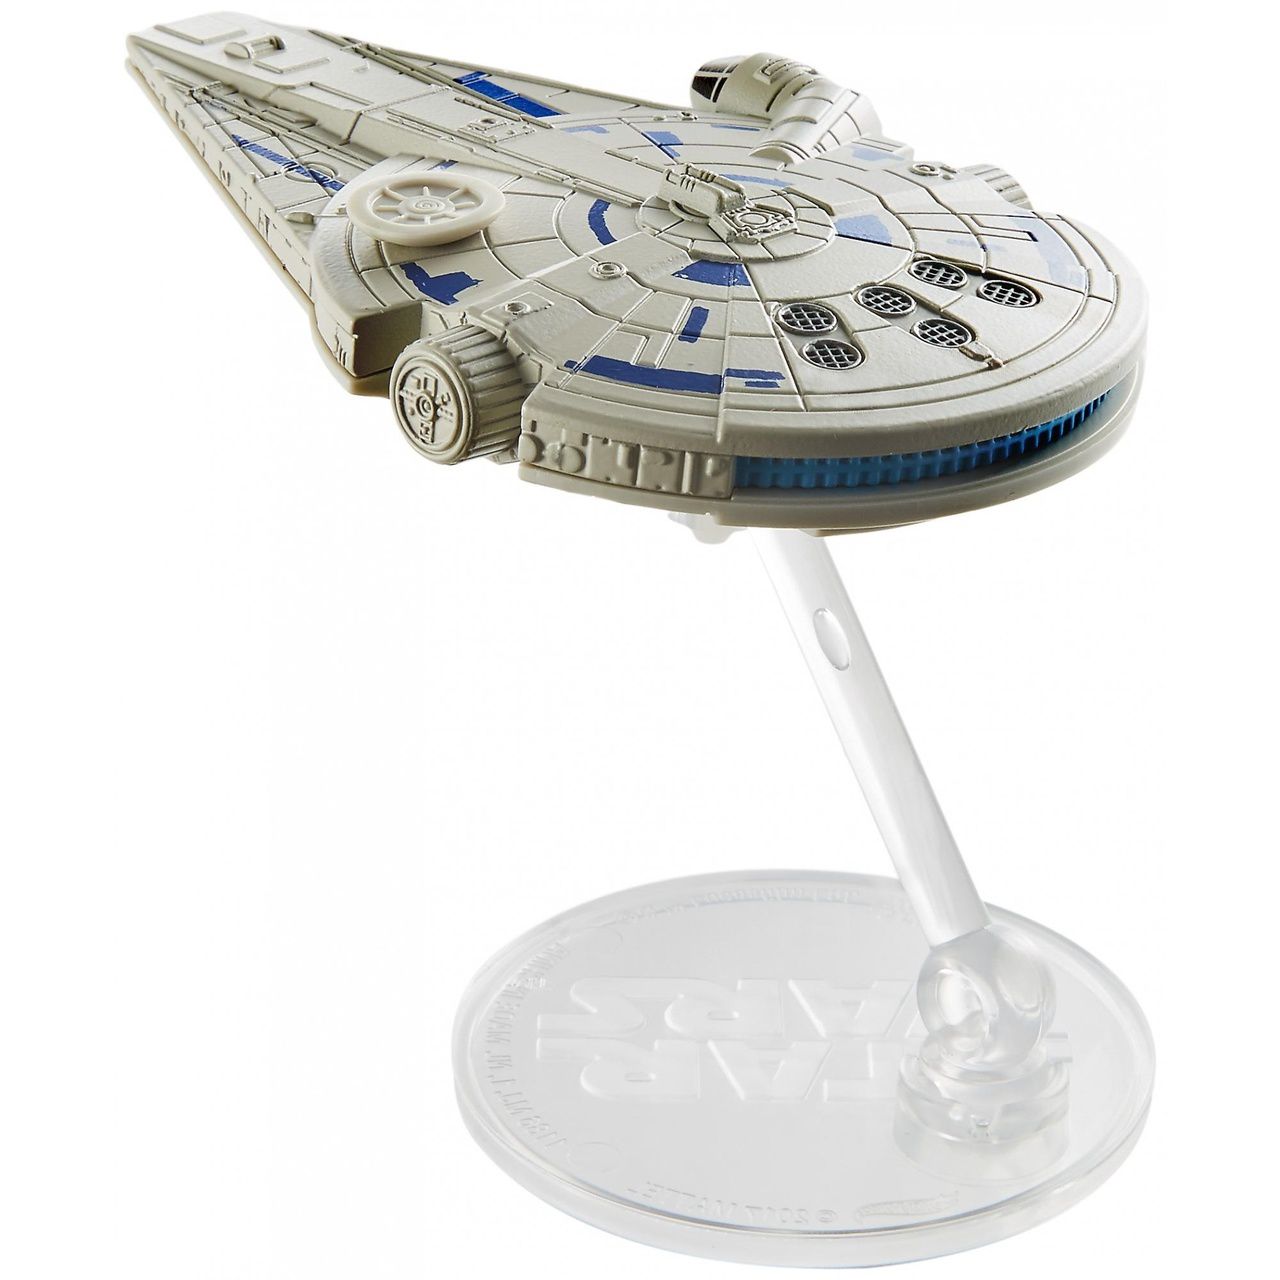 Hot Wheels Millennium Falcon: Star Wars - Mattel 